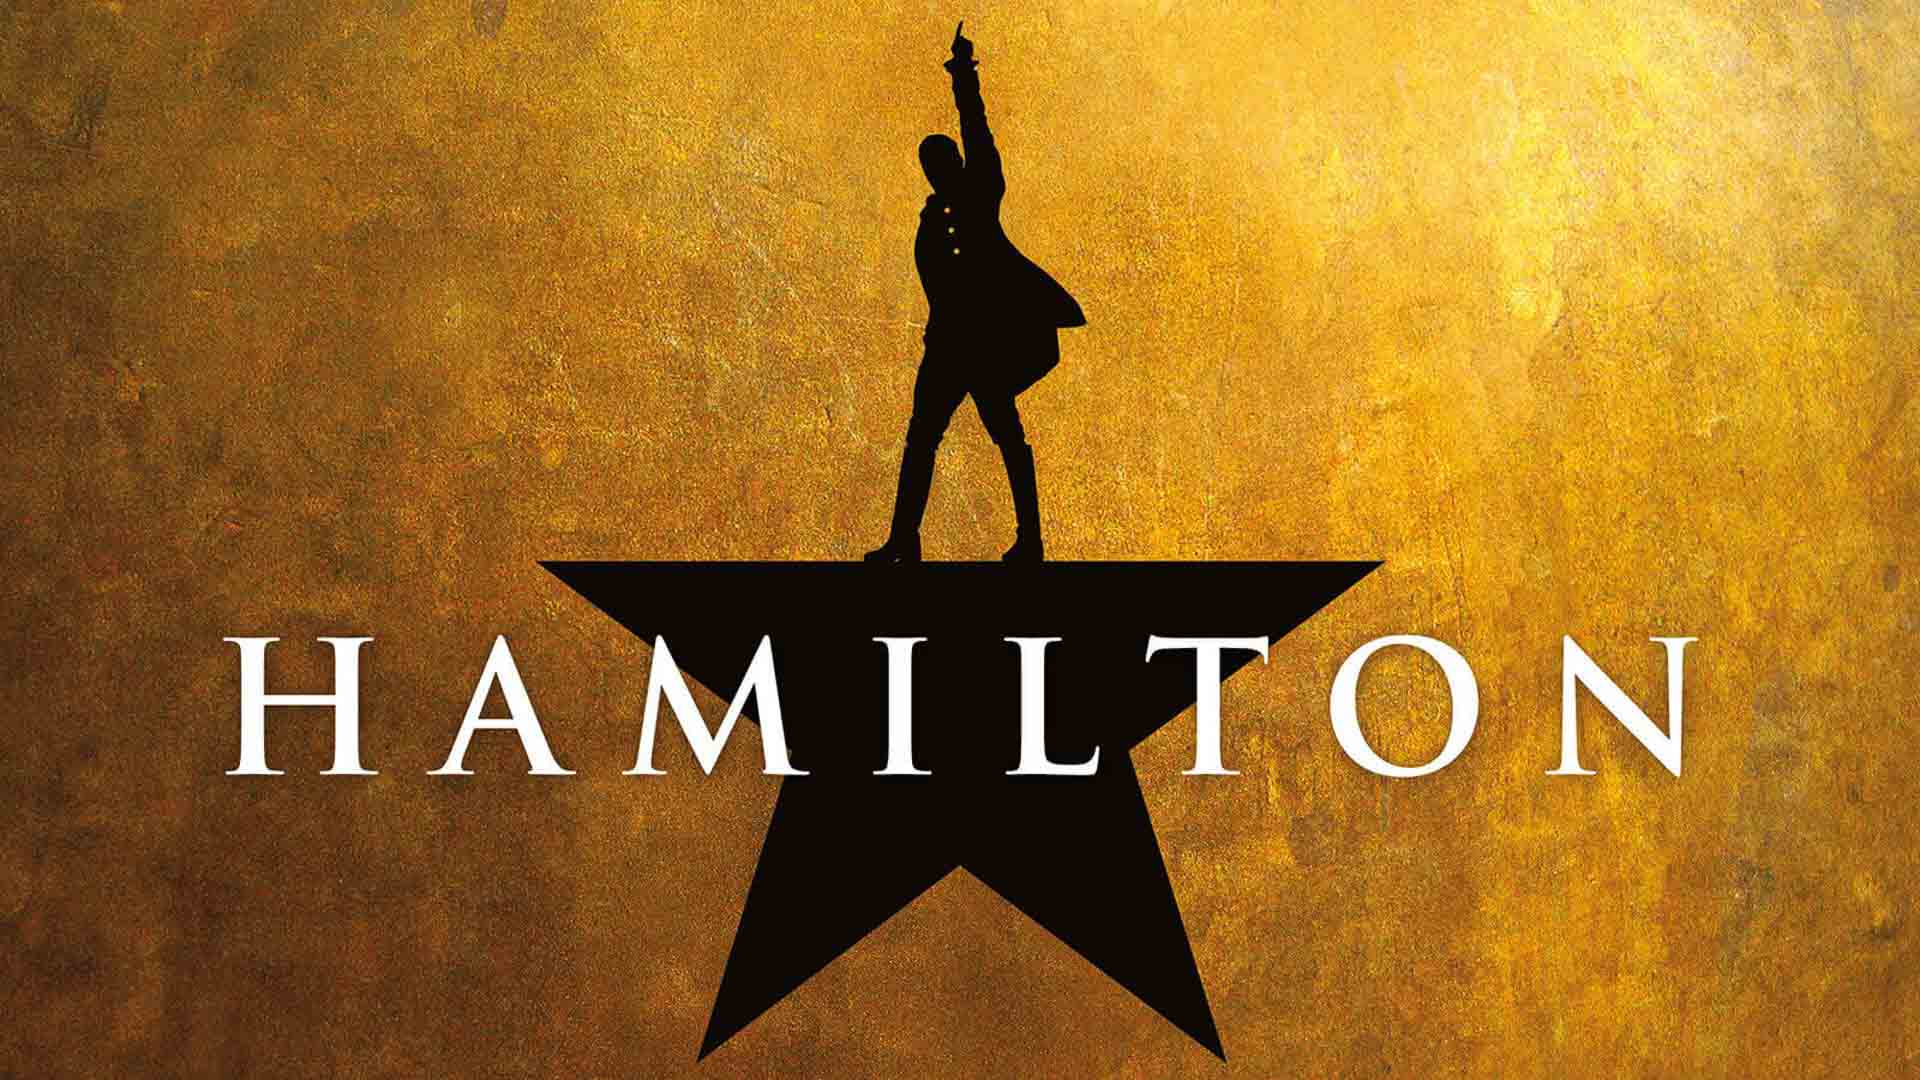 Hamilton The Musical